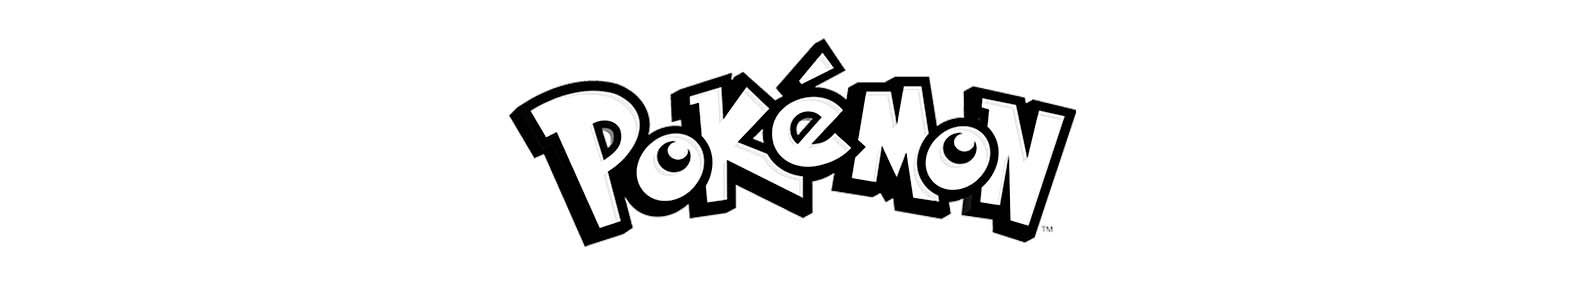 Pokemon brand header image